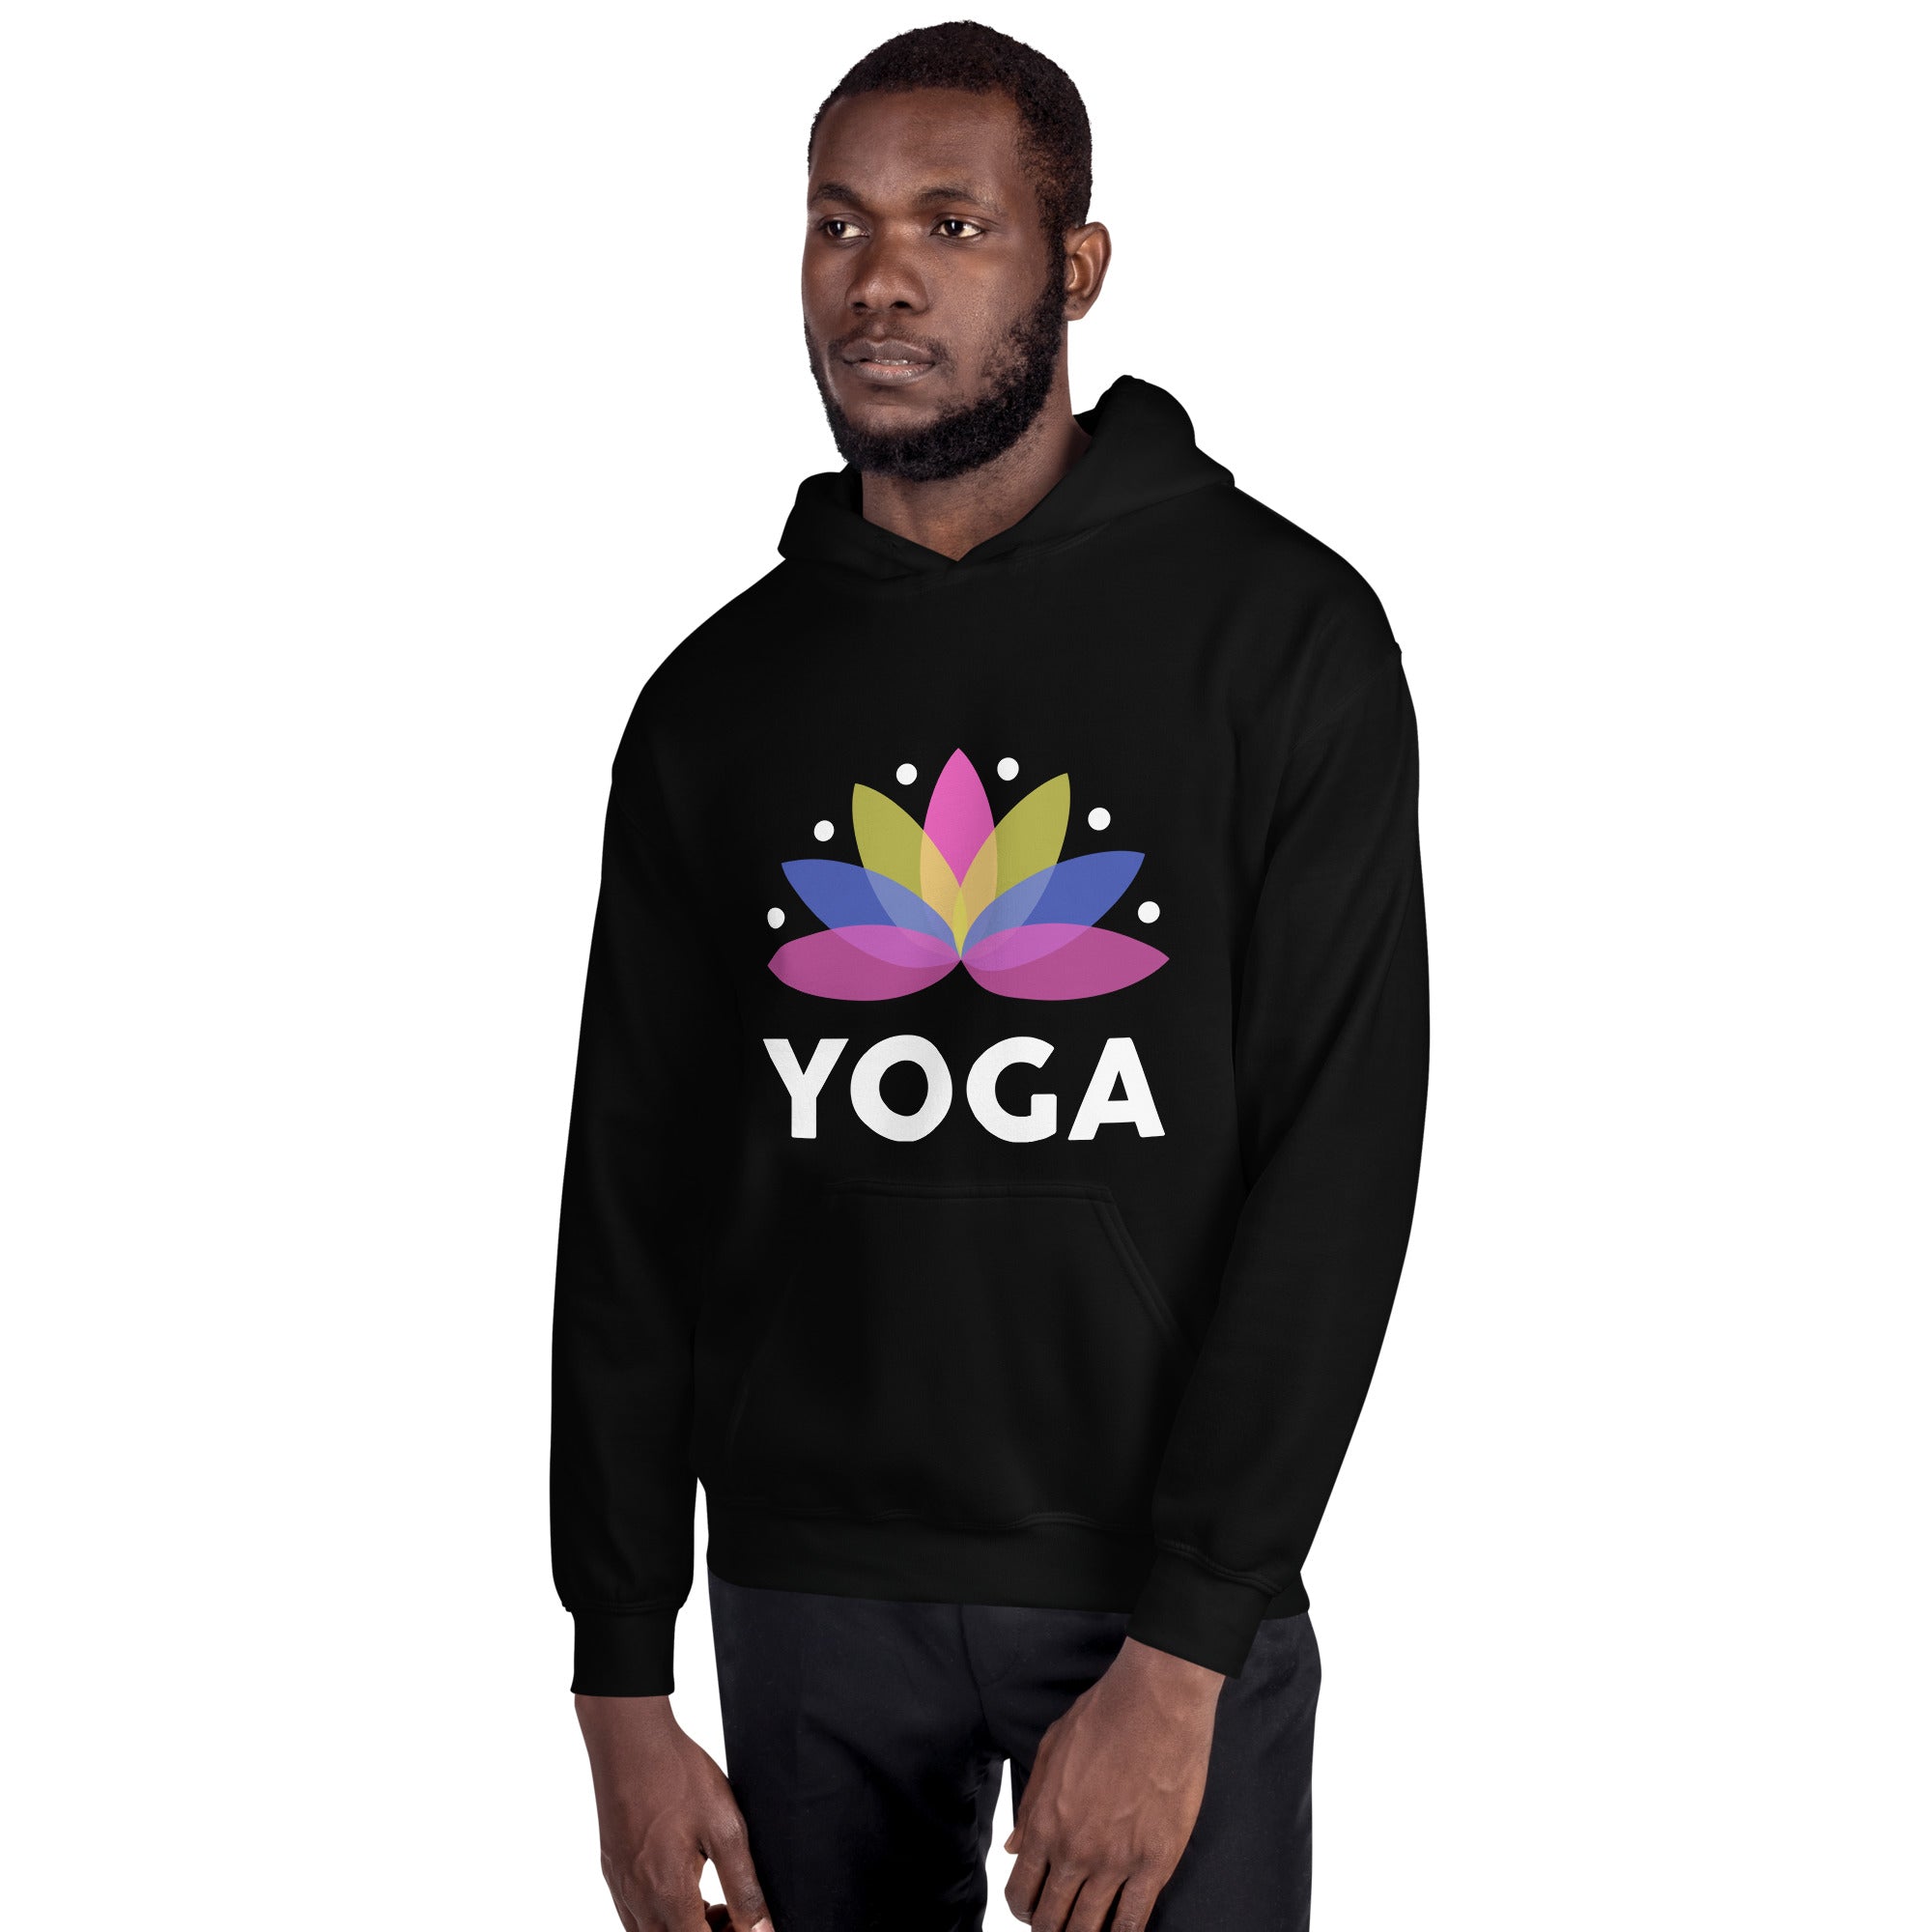 Do Yoga - Unisex Hoodie